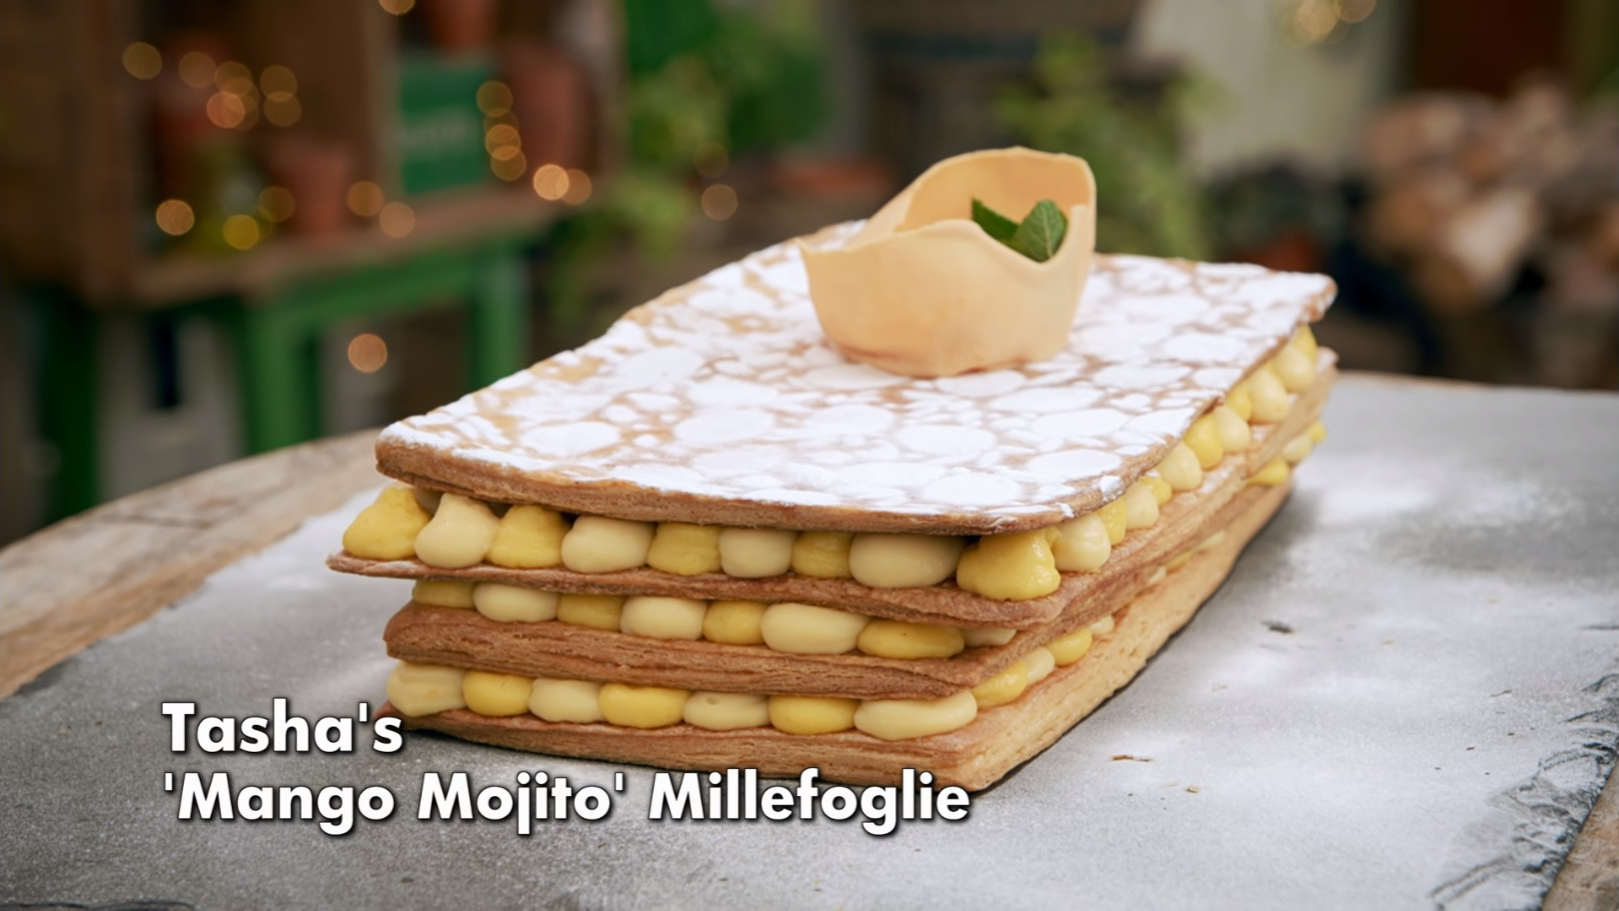 Tasha's Unfinished Mango Mojito’ Millefoglie Showstopper from The Great British Baking Show Season 14's SemiFinal